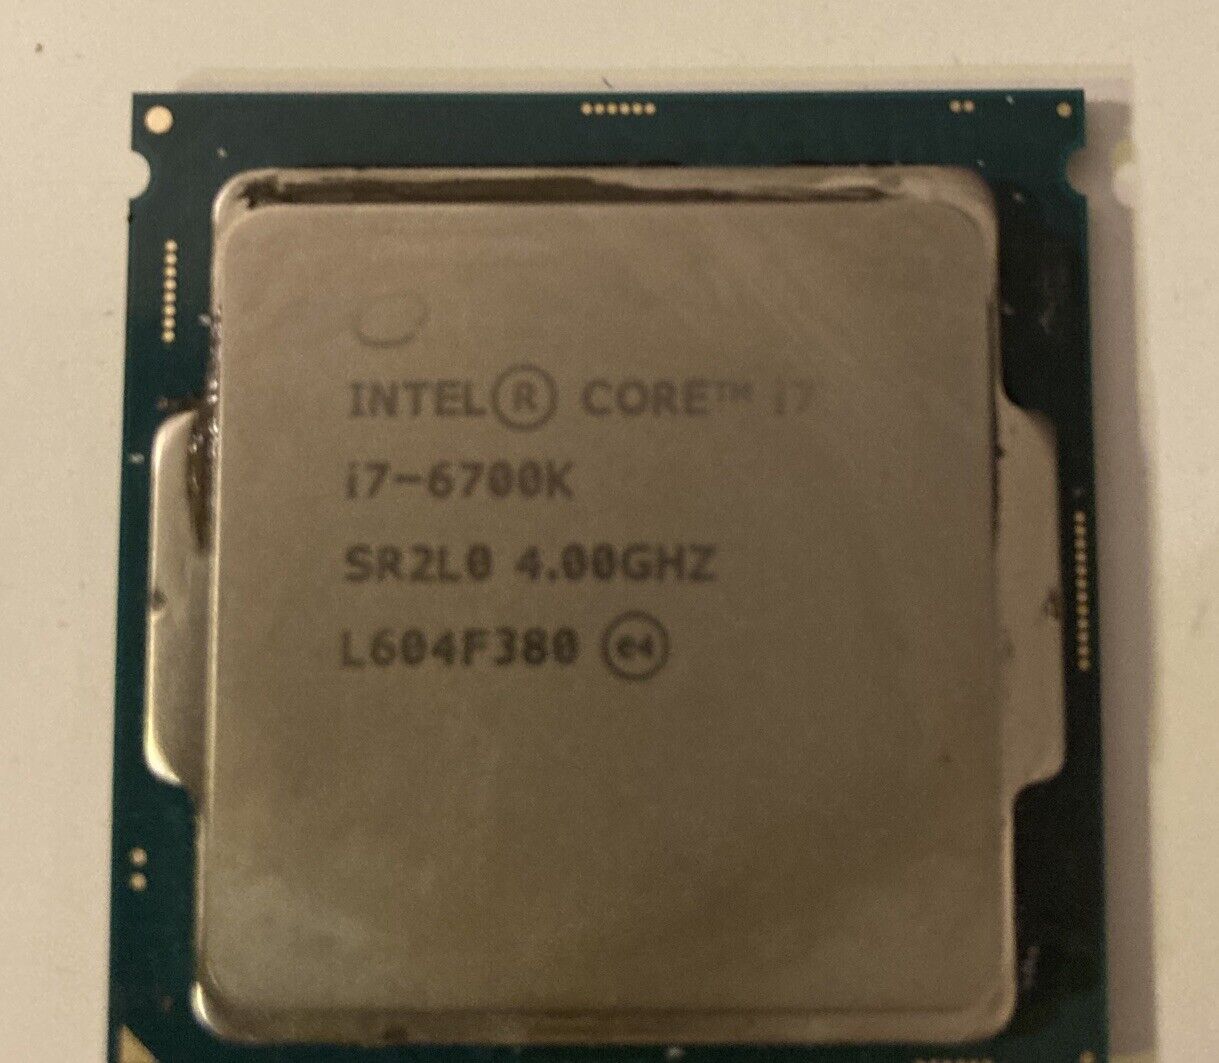 Intel Core i7-6700K 4.0 GHz Quad-Core (BX80662I76700K) Processor